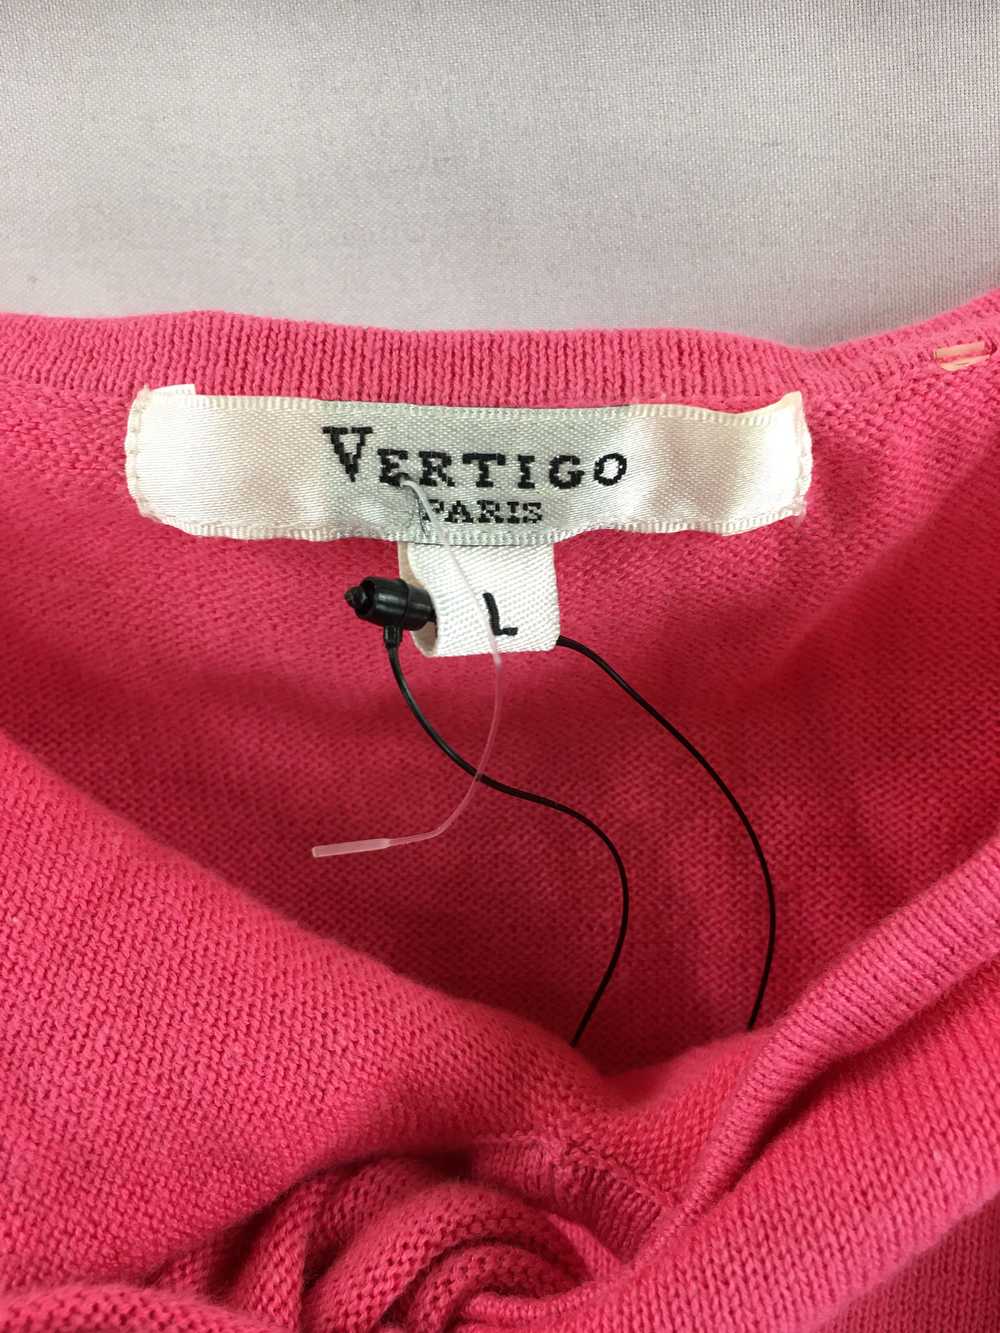 Vertigo Women Pink Sleeveless Top L - image 3